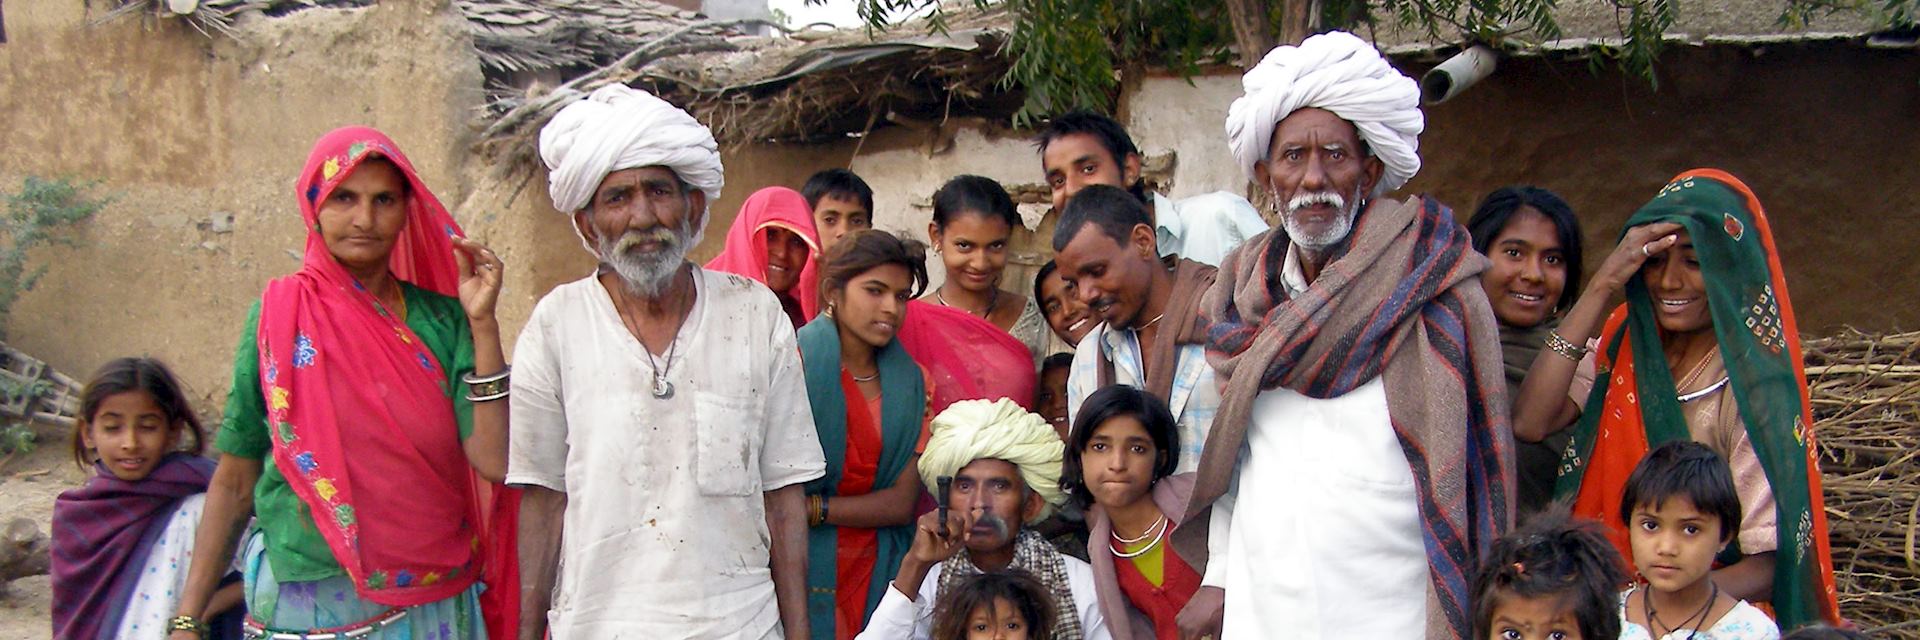 Villagers in Barli